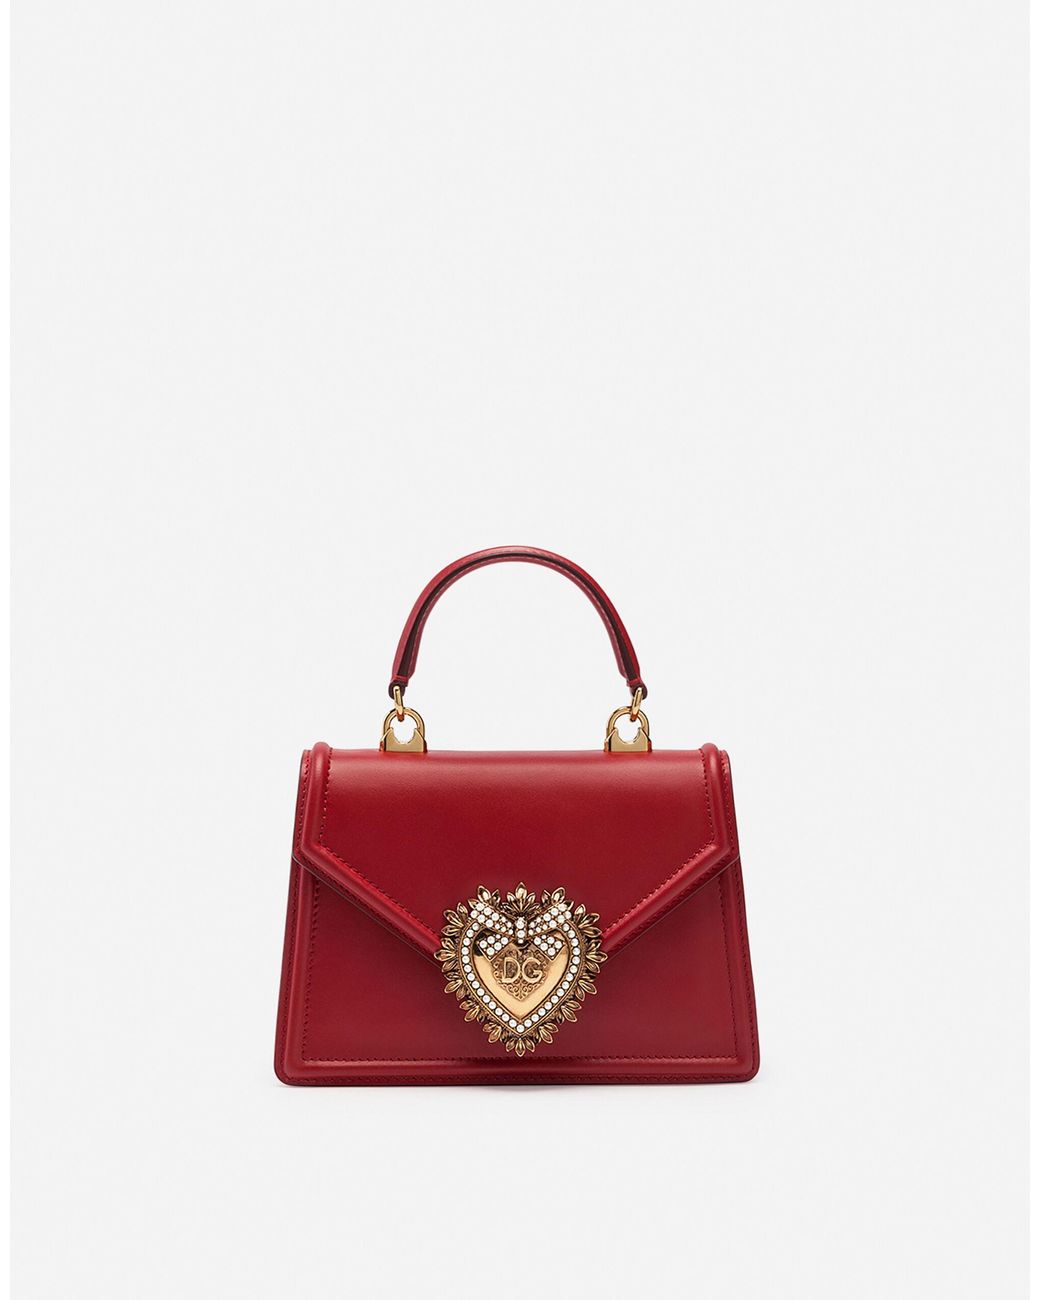 Dolce & Gabbana Leather Medium Devotion Bag in Red - Save 16 